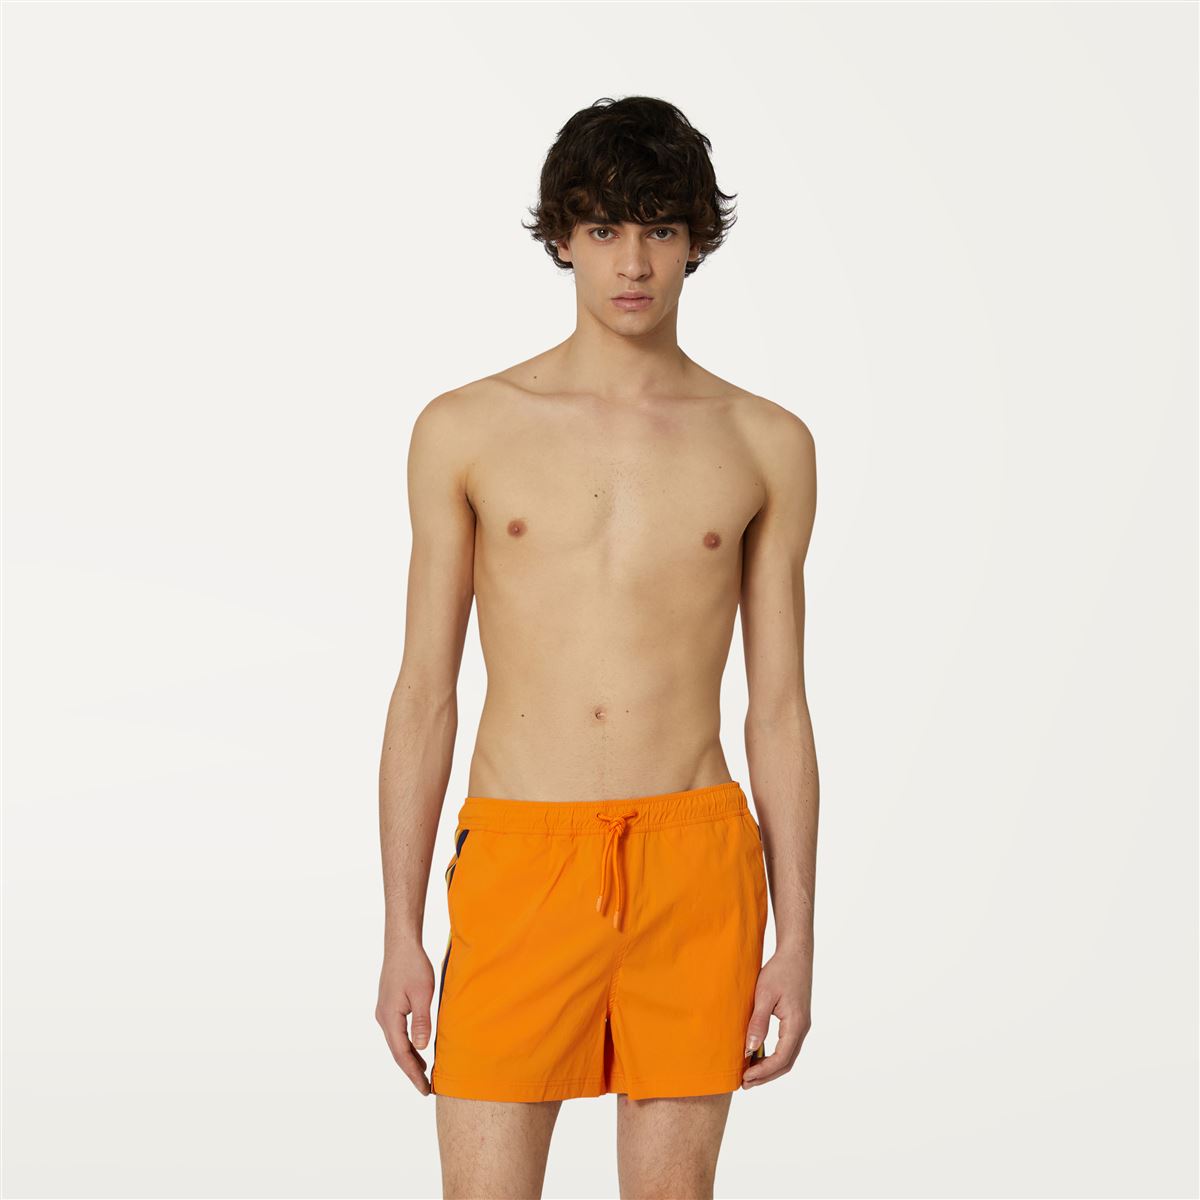 SALT - Bathing Suit - Nylon - Man - Orange Rust